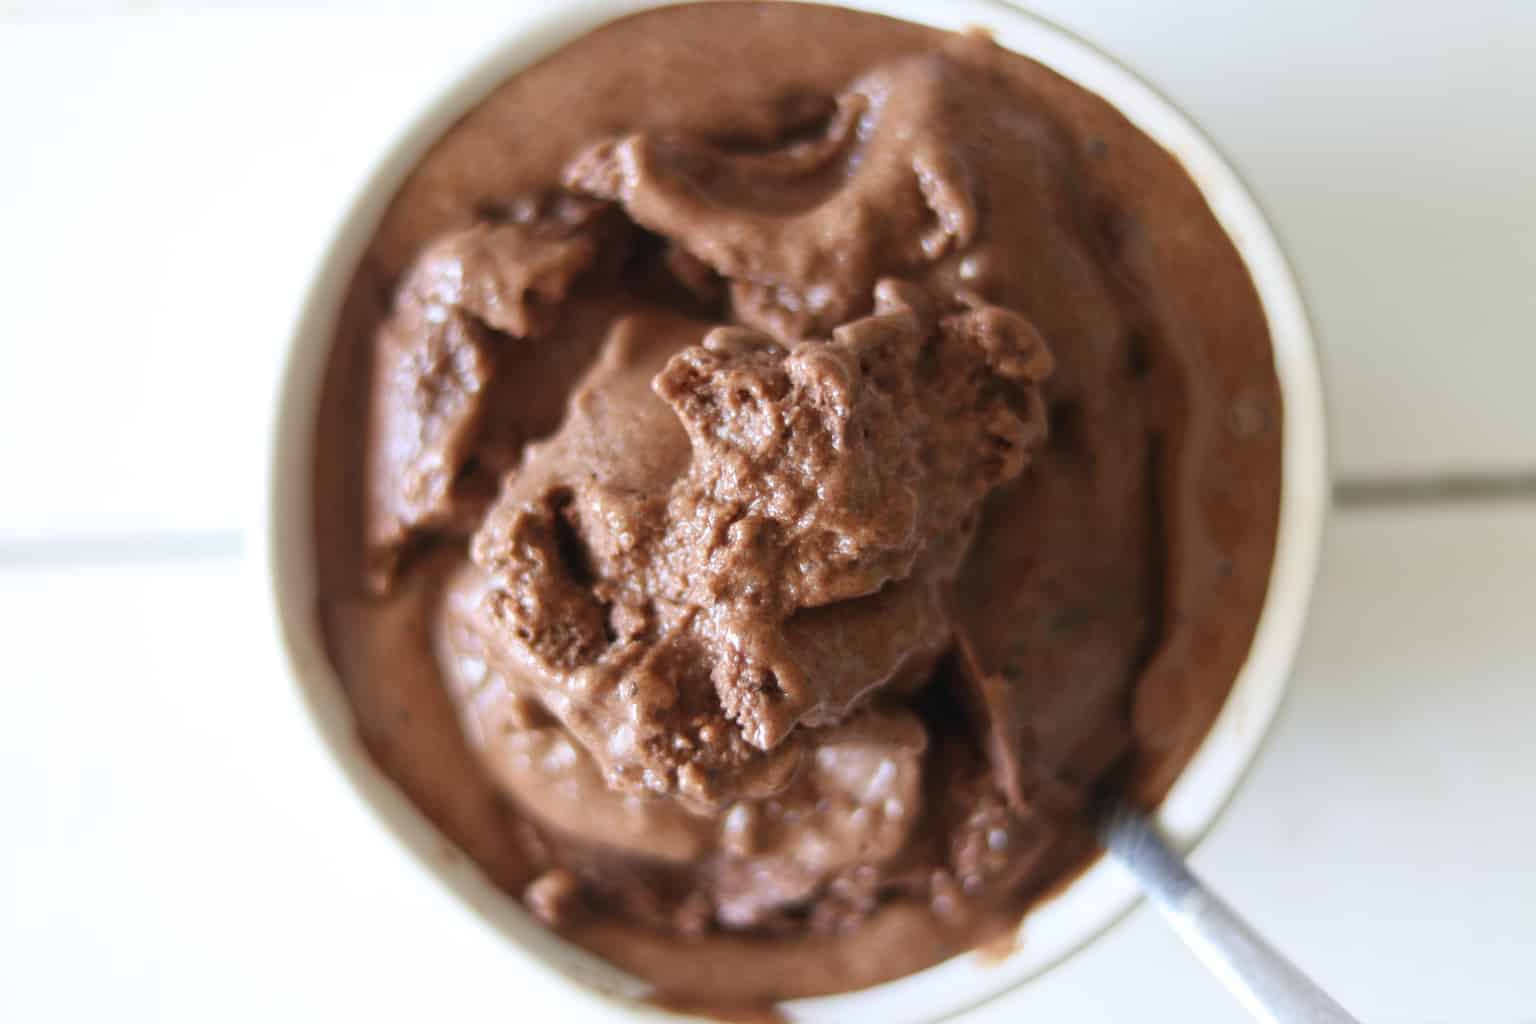 Bowl of homemade peanut butter chocolate ice cream.